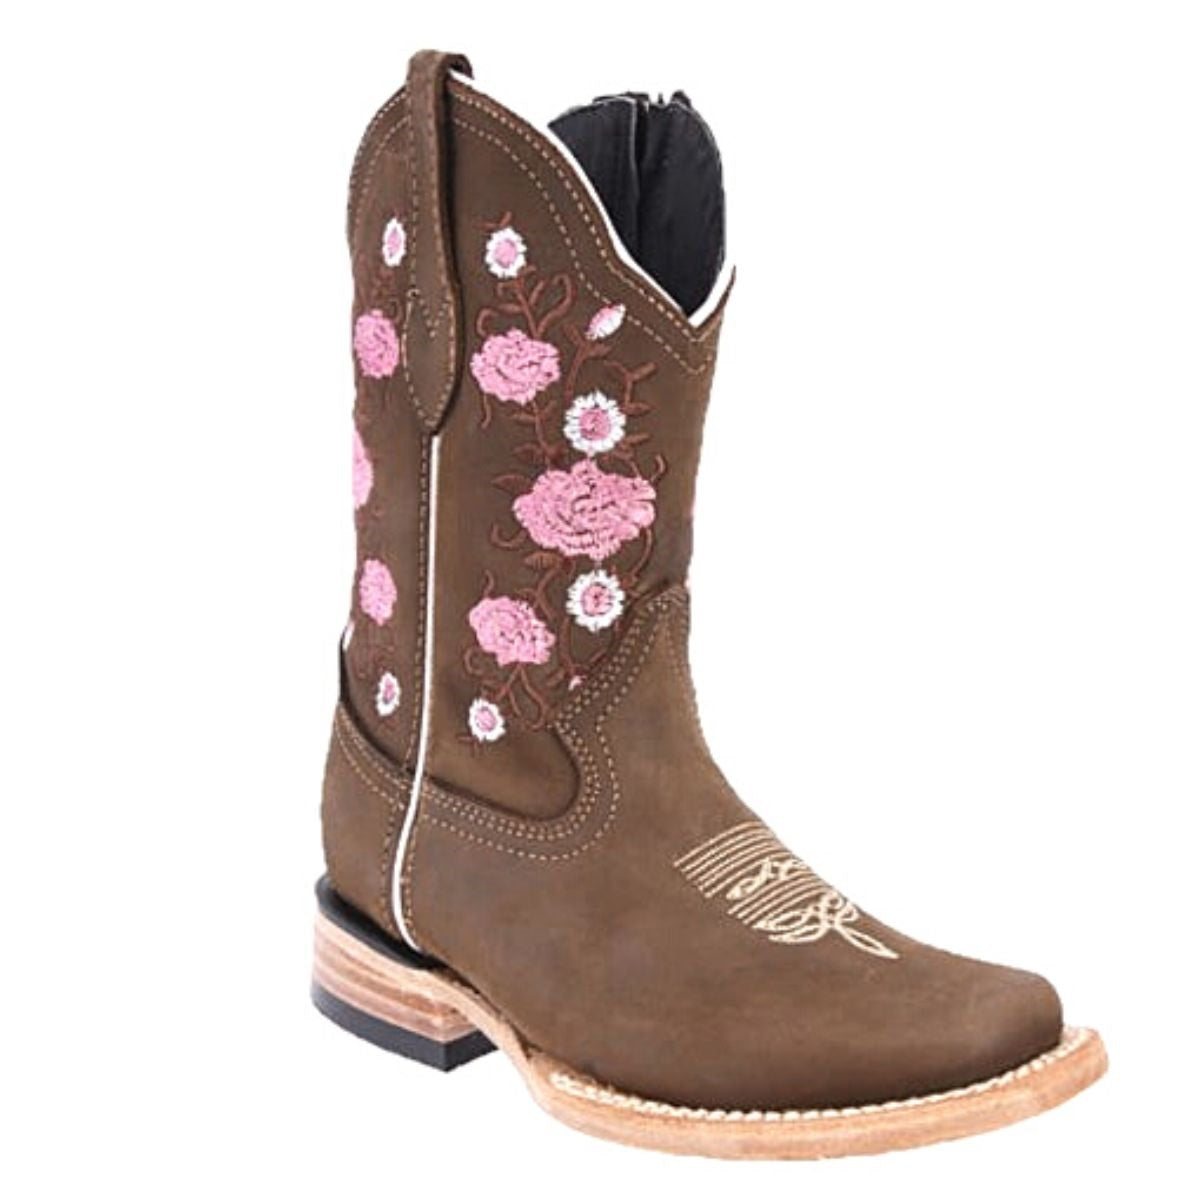 Botas vaqueras para ninas KS-WD0389-389 - Girls Western Boots